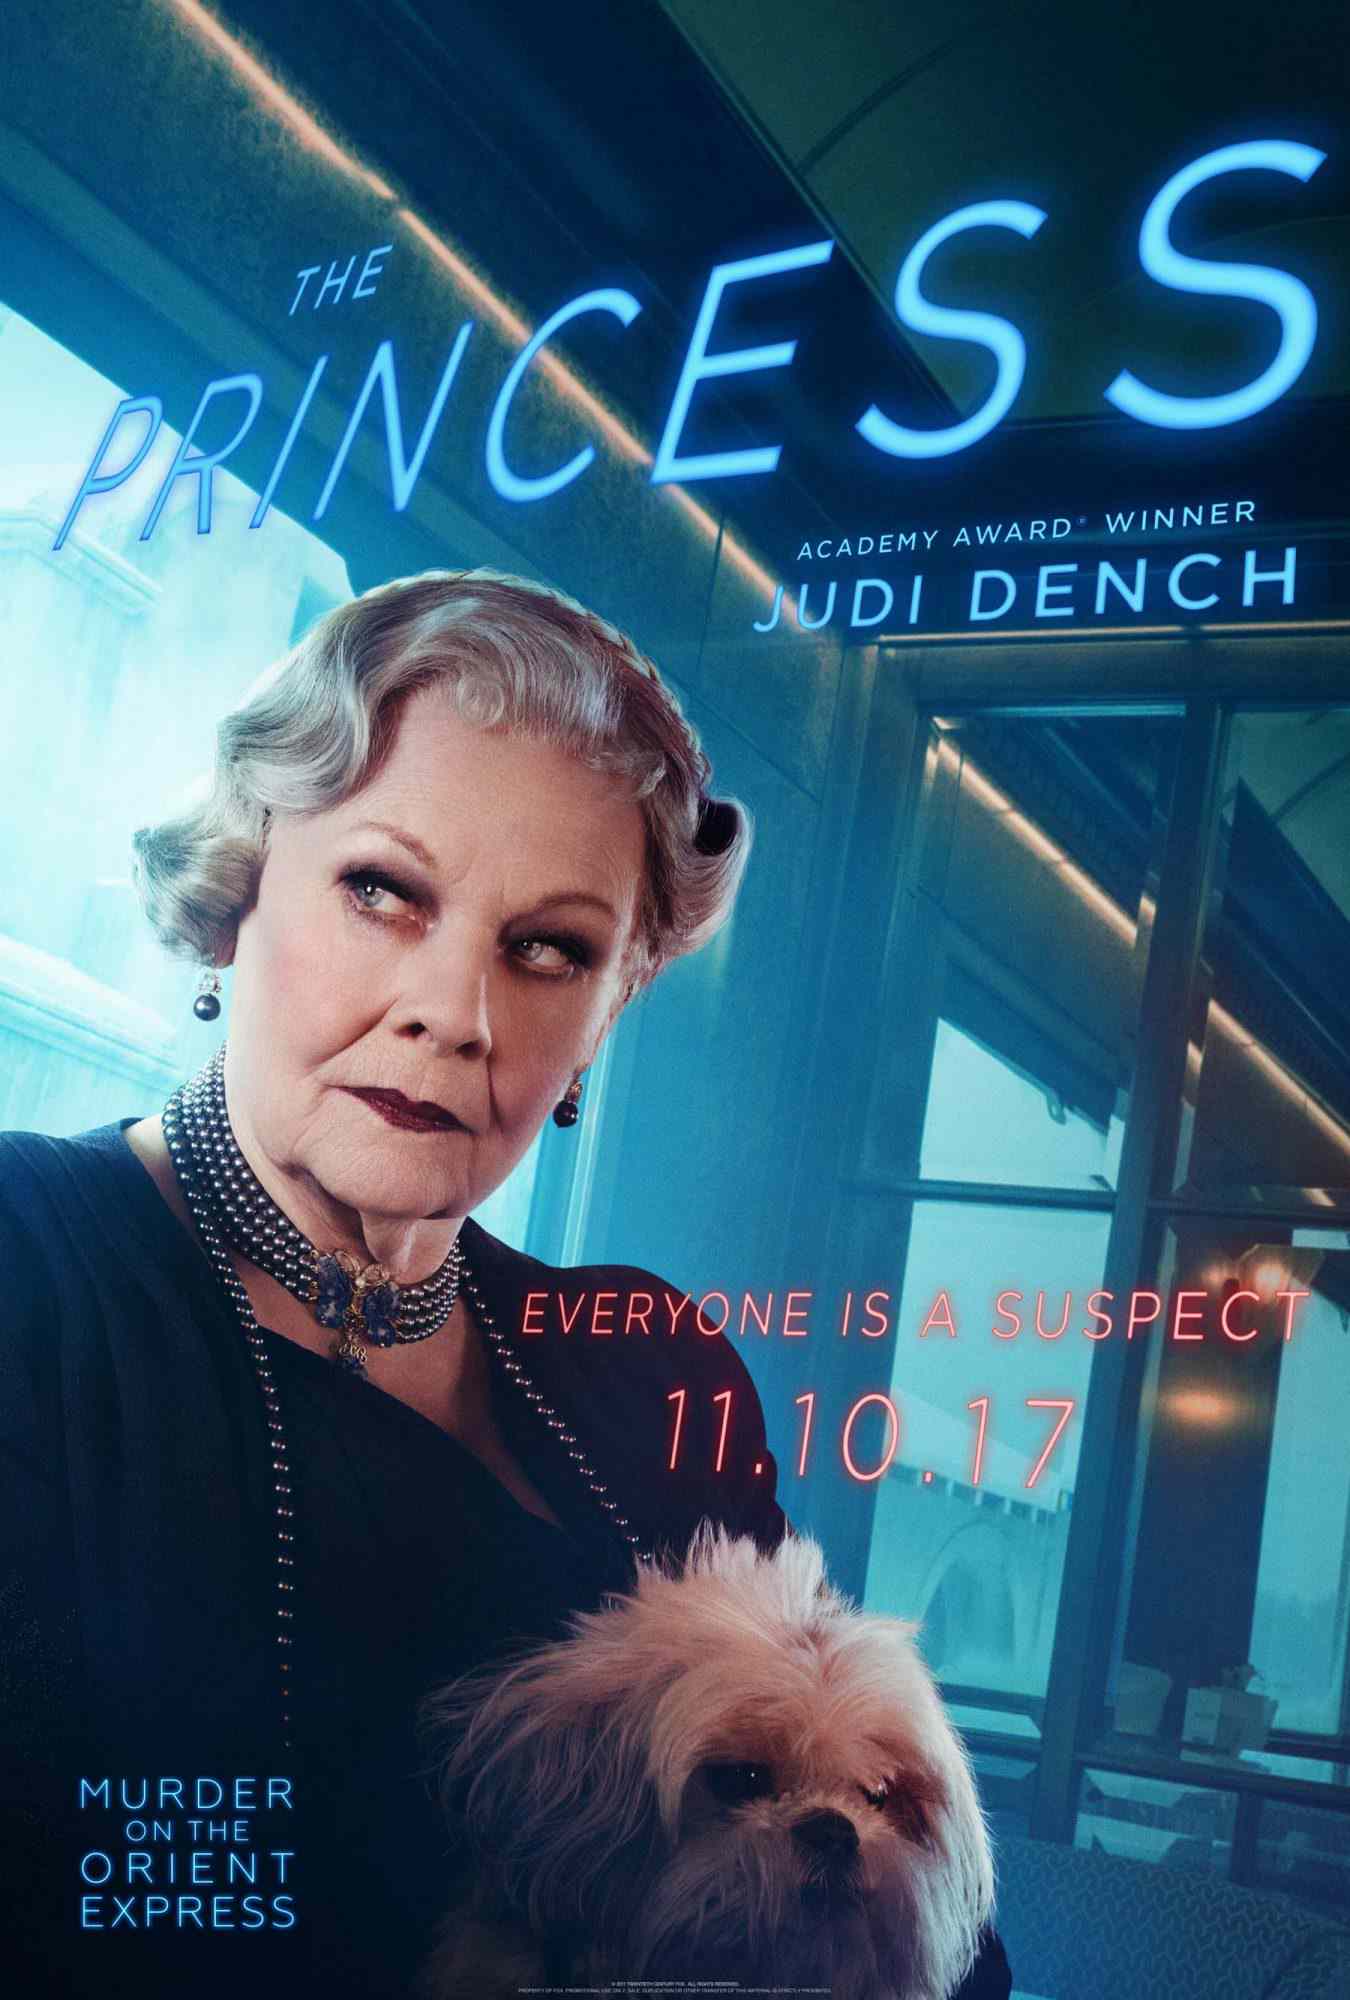 Judi Dench as Princess Dragomiroff